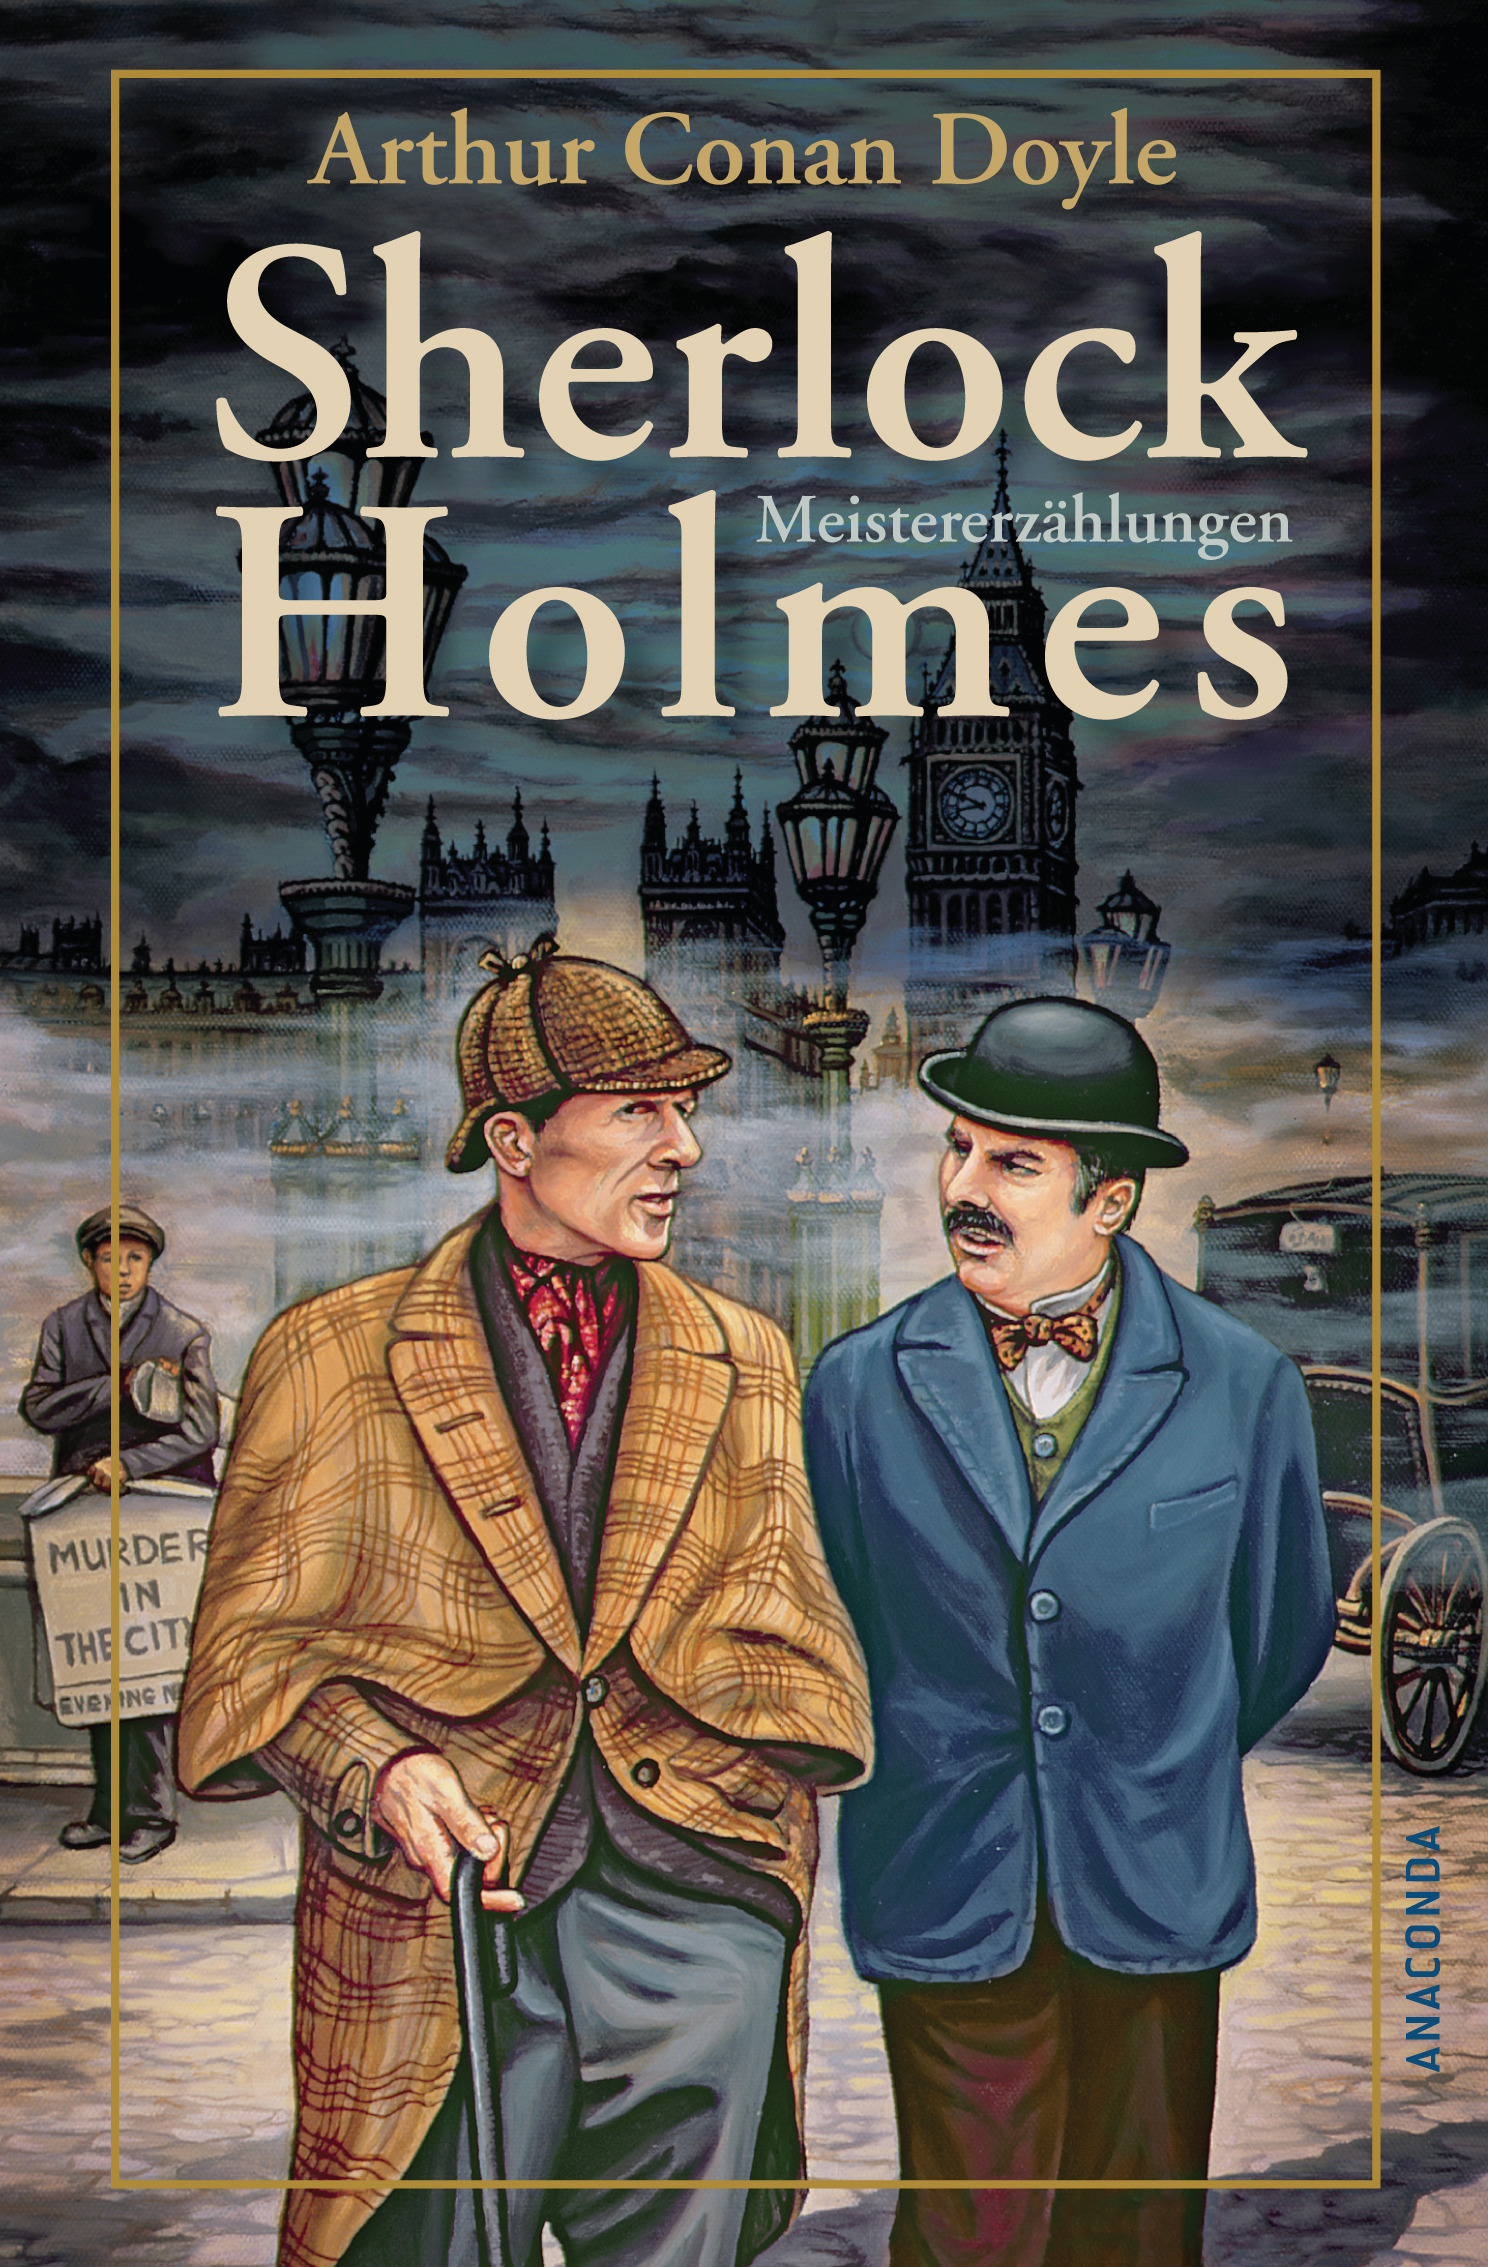 Конан дойл на английском. Artur Conan doil Sherlock. The Adventures of Sherlock holmes книга. Arthur Conan Doyle Sherlock holmes books.